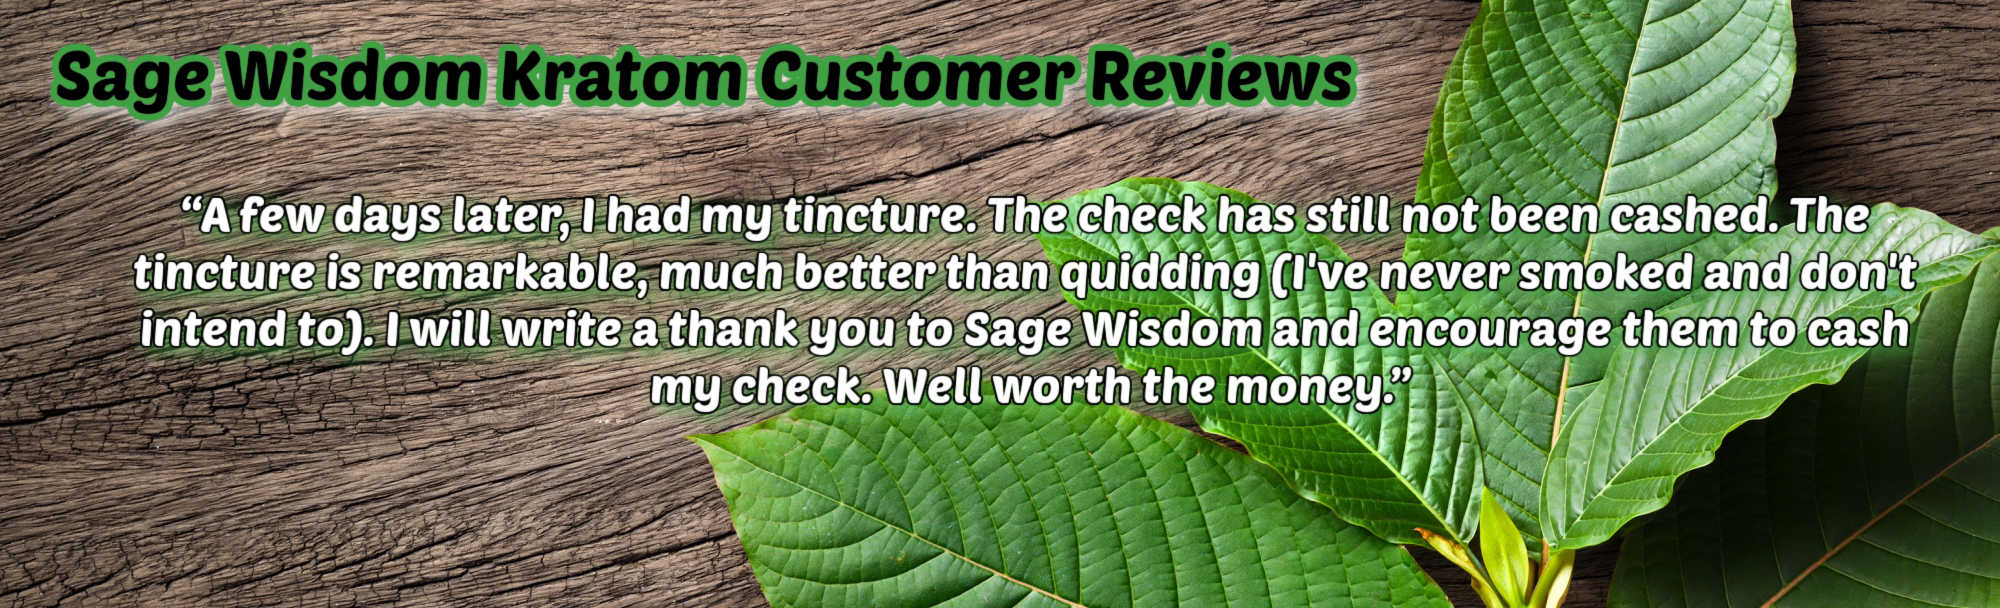 image of saga botanicals customer reviews